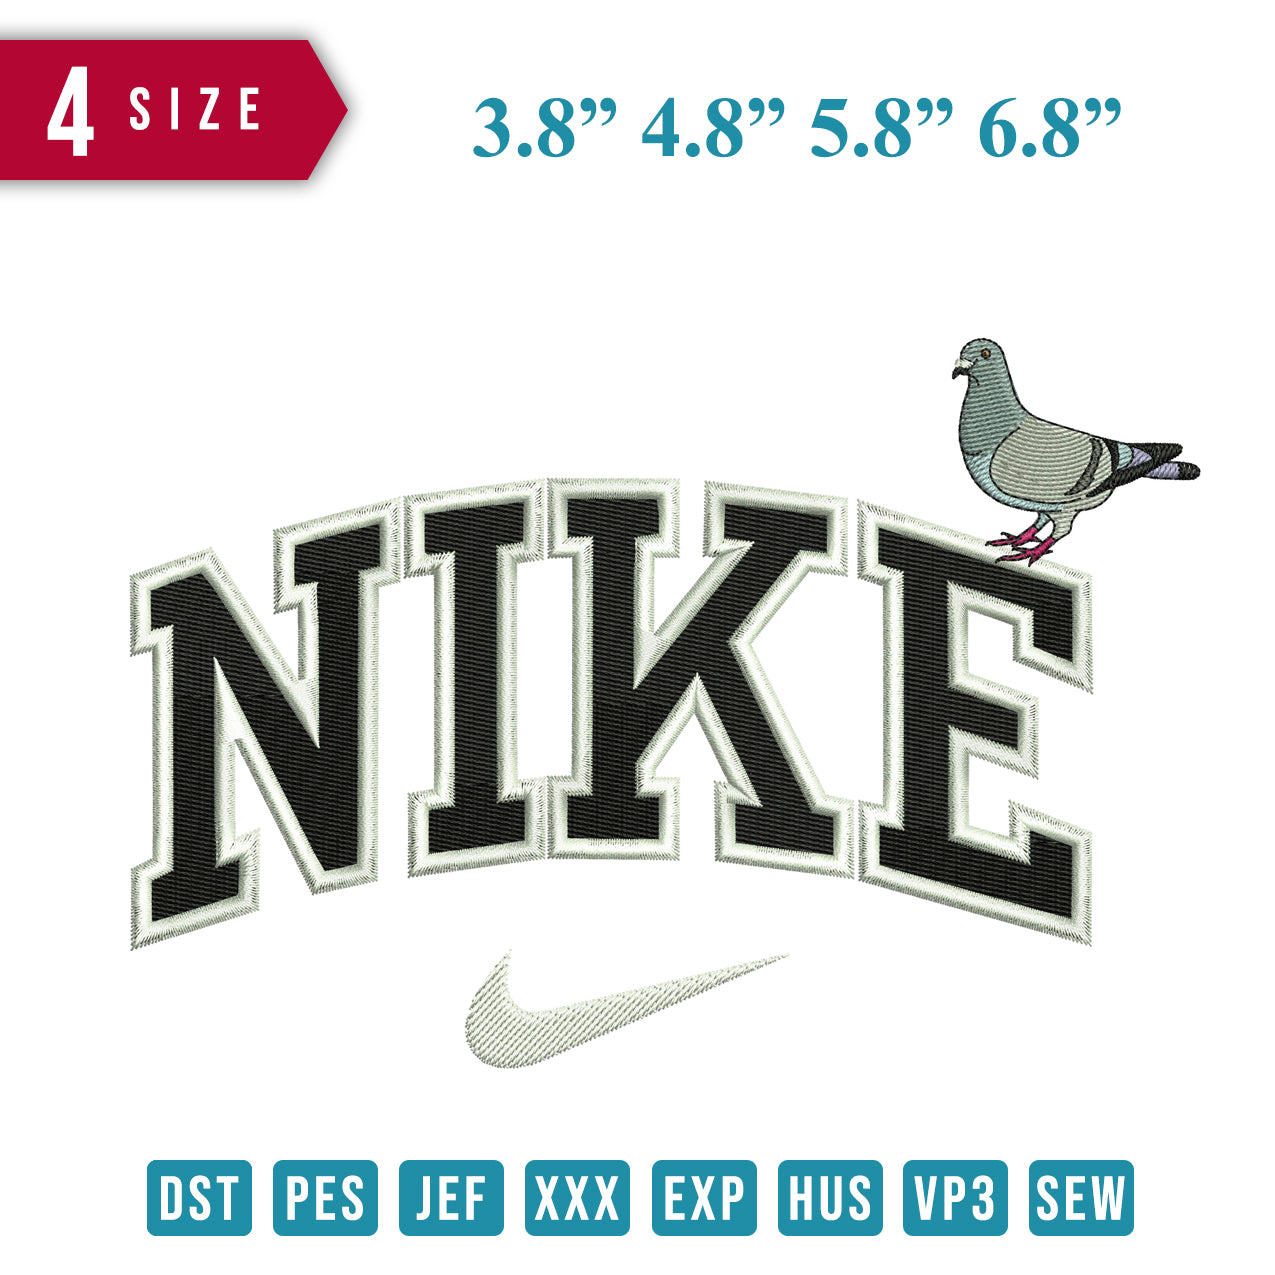 Nike Pigeon